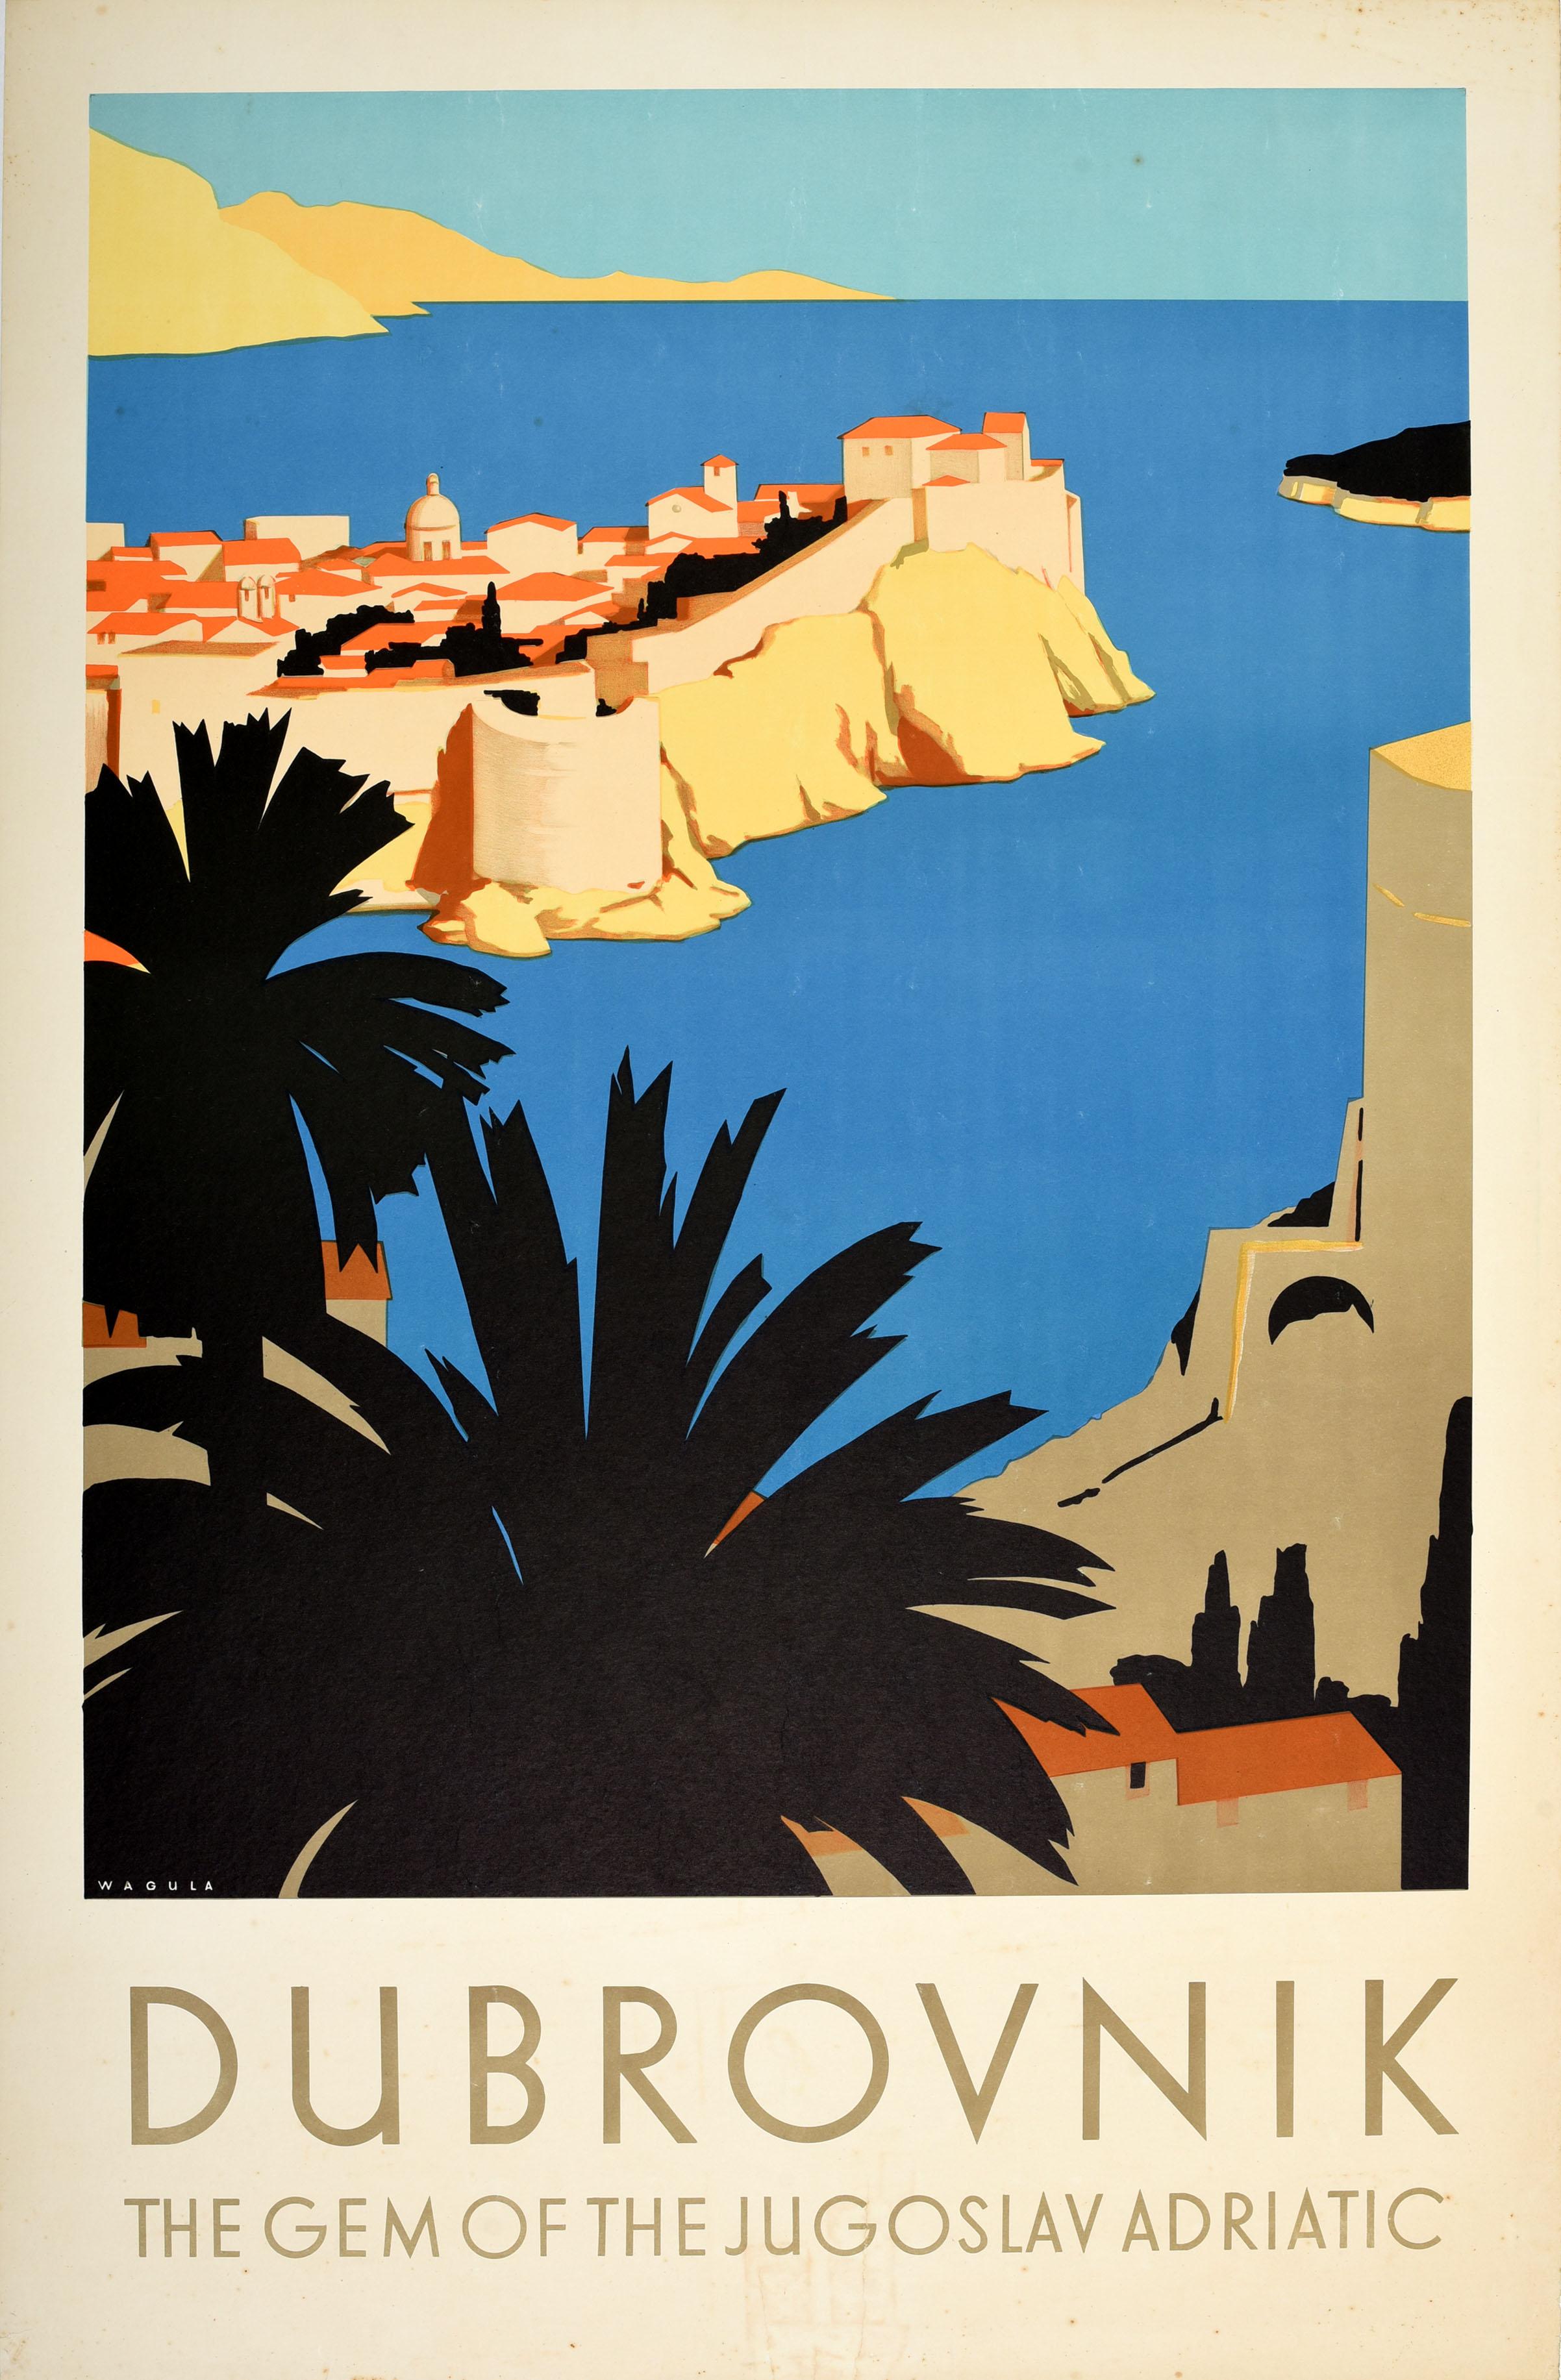 Hans Wagula Print - Original Vintage Travel Poster Dubrovnik Jugoslavia Gem Of The Adriatic Coast